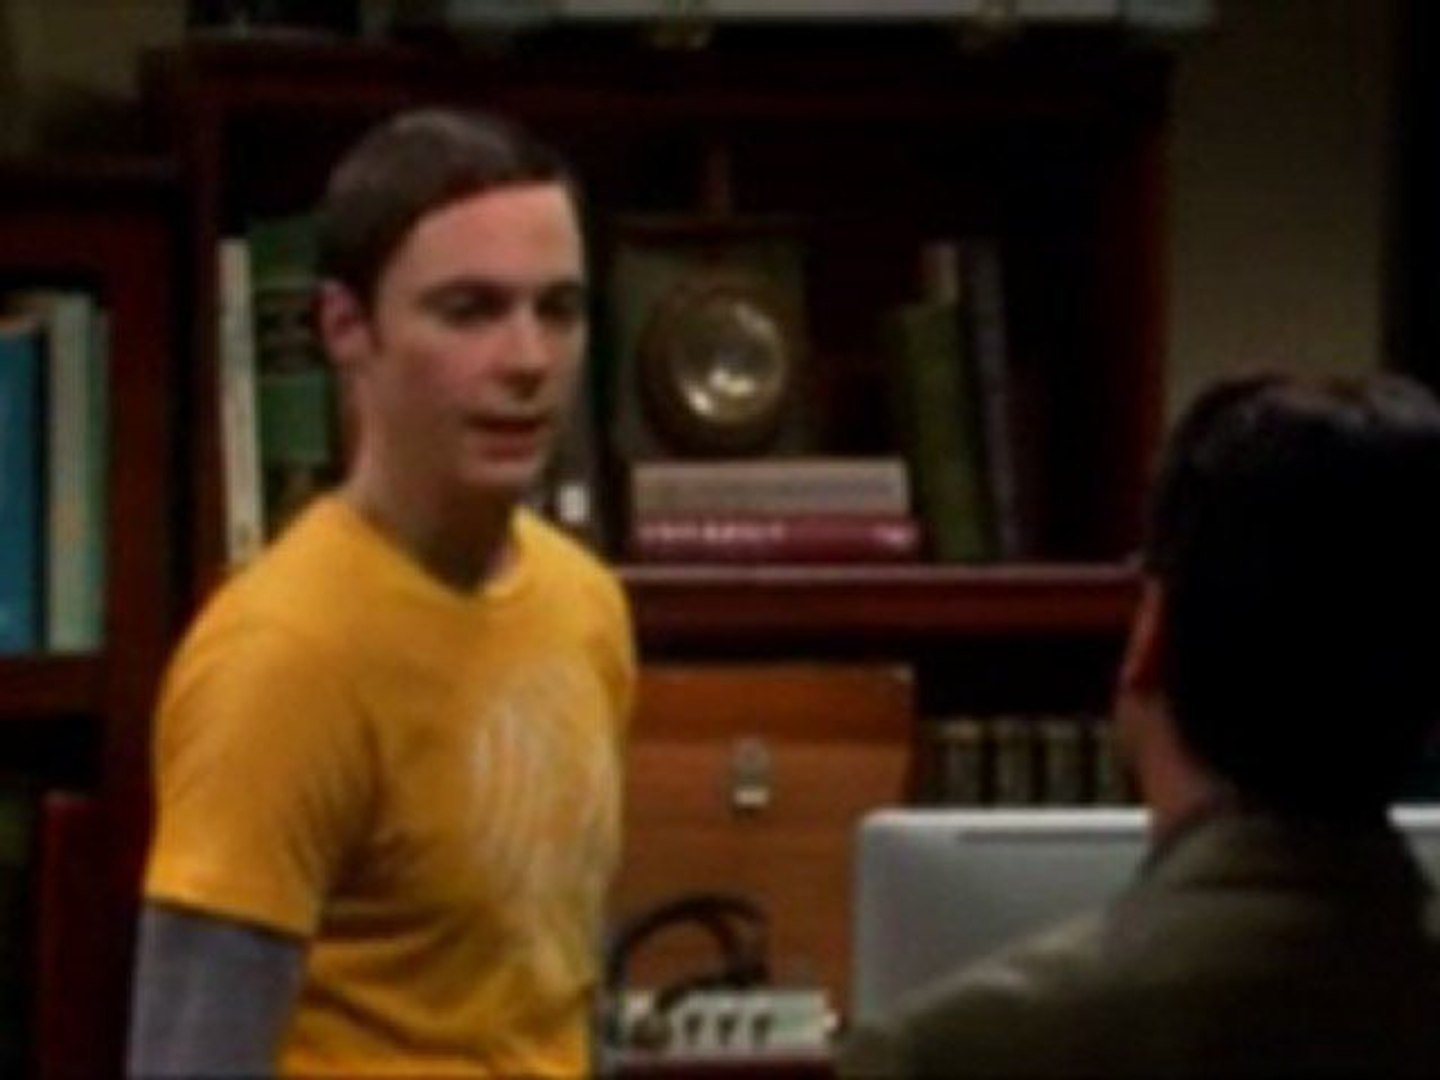 The Big Bang Theory 5x09 Sneak Peek!